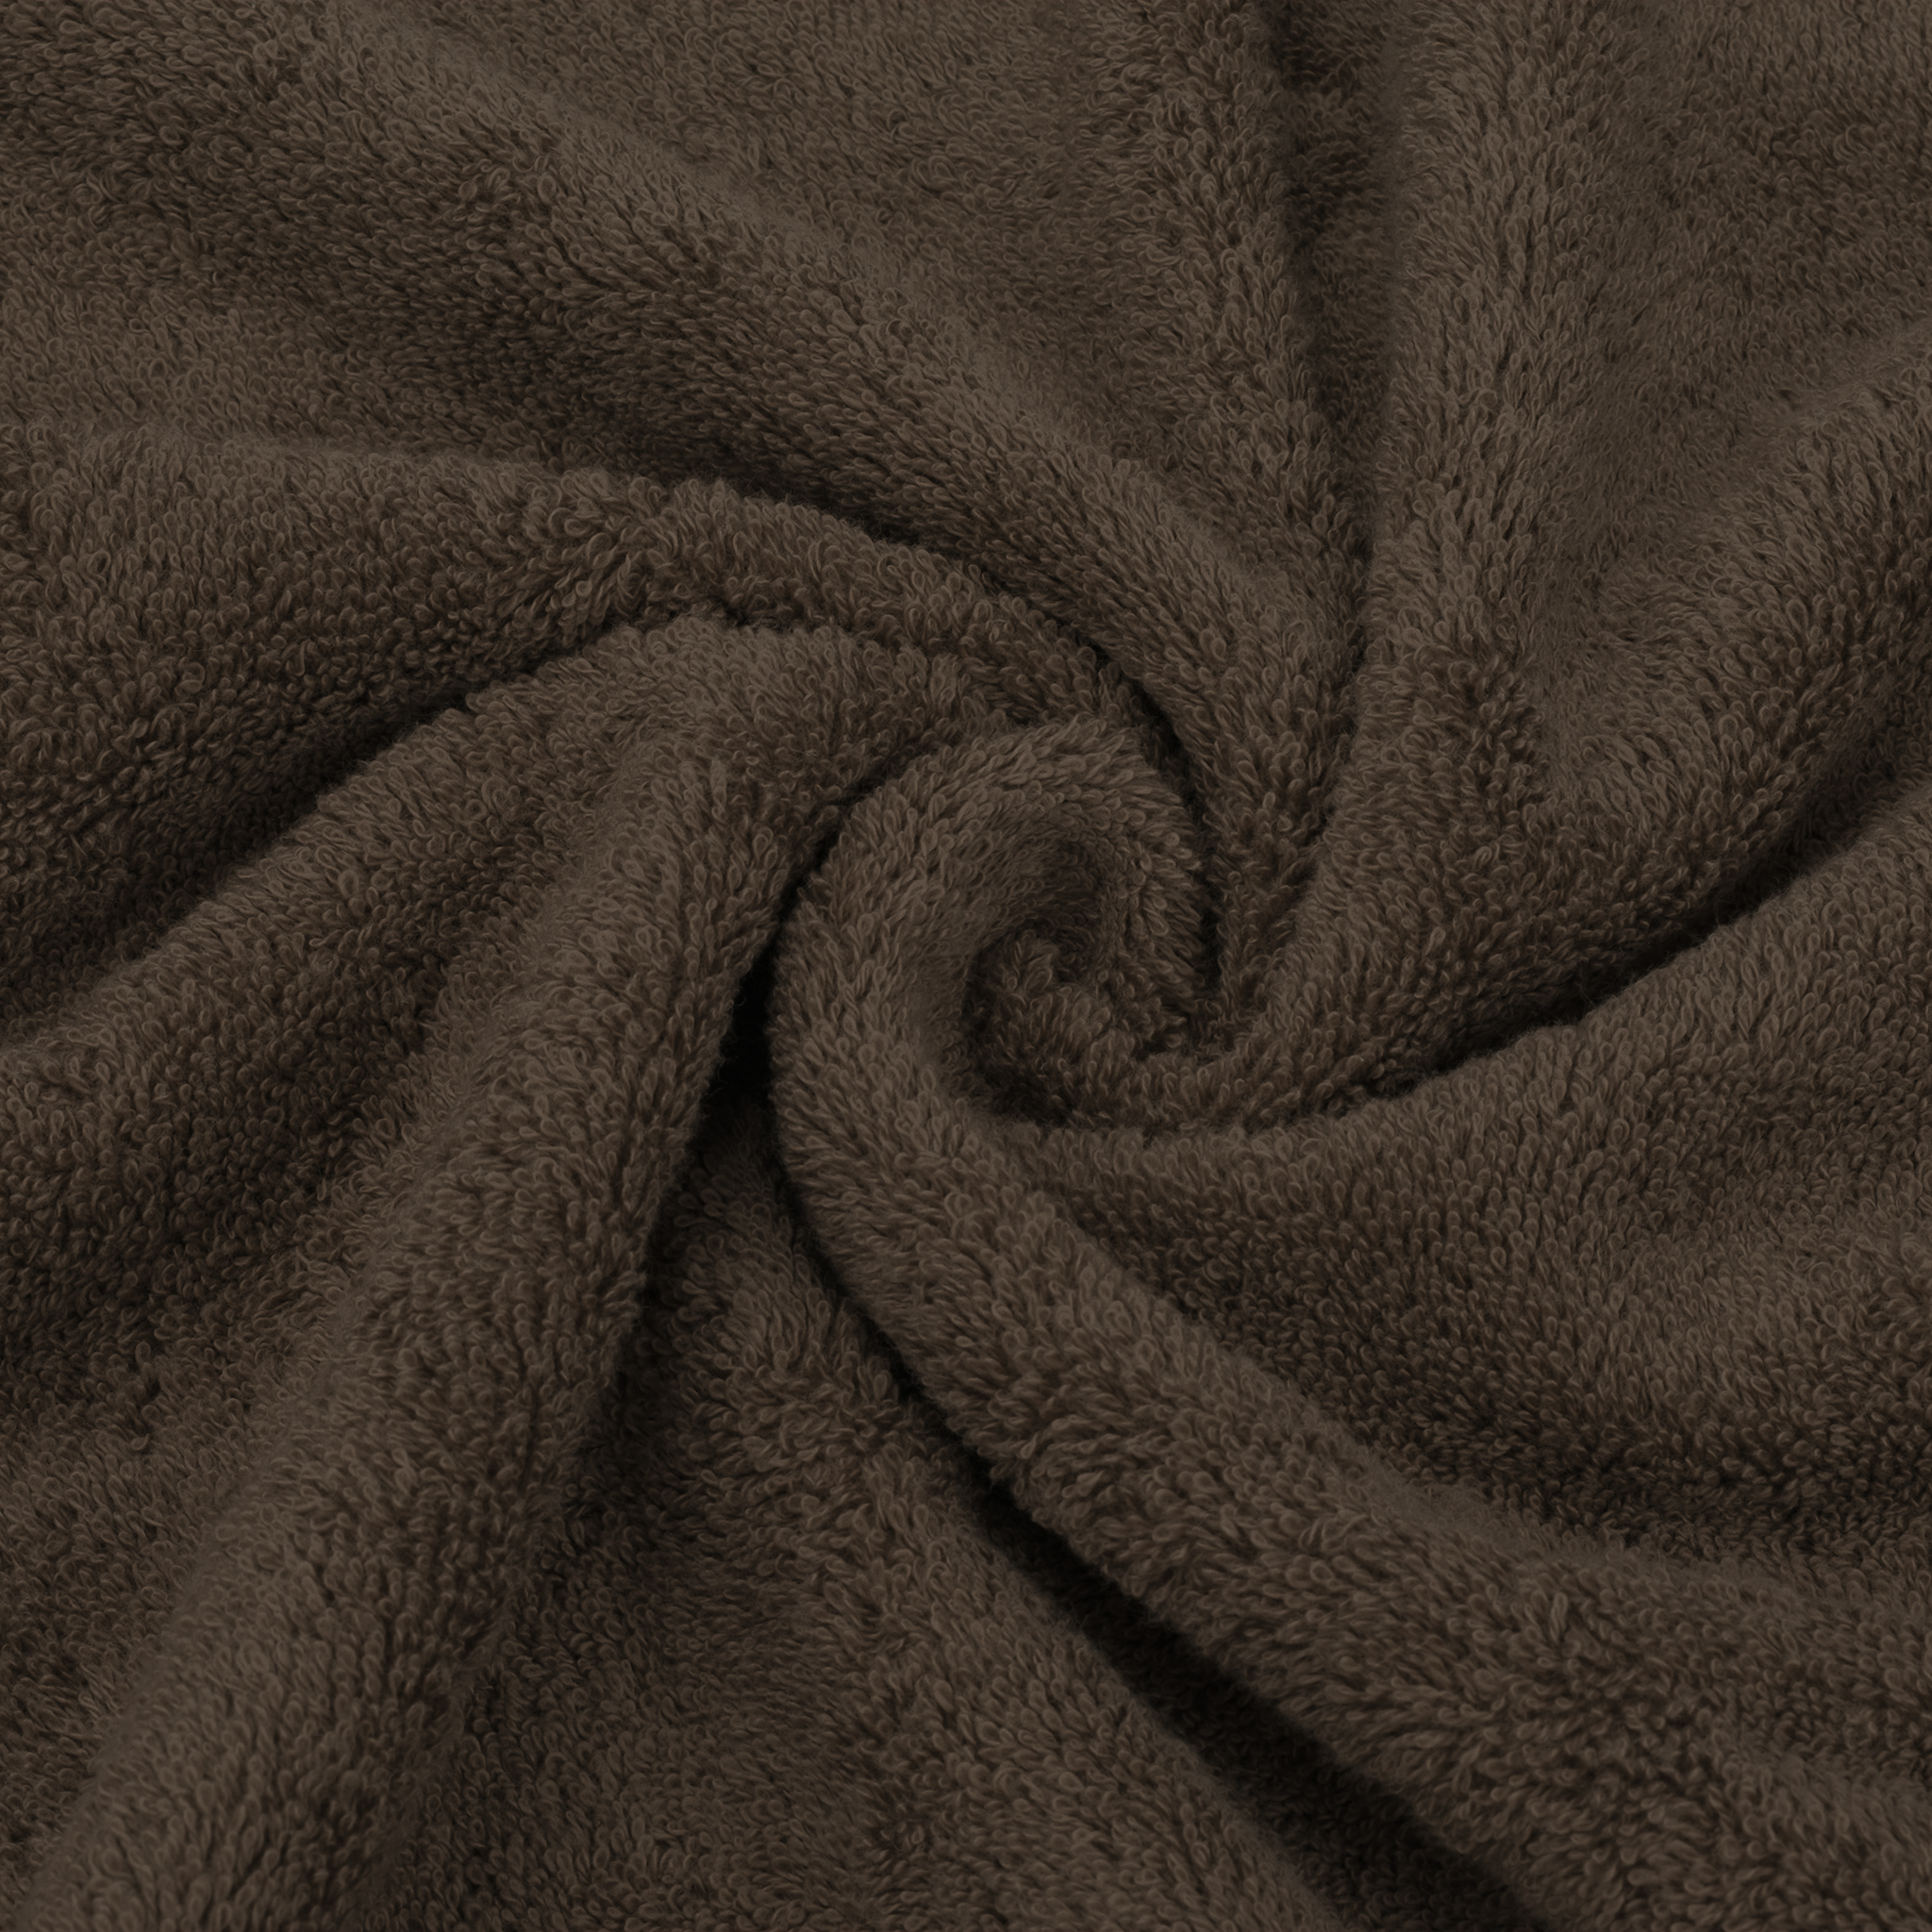 American Soft Linen - Single Piece Turkish Cotton Hand Towels - Chocolate-Brown - 5